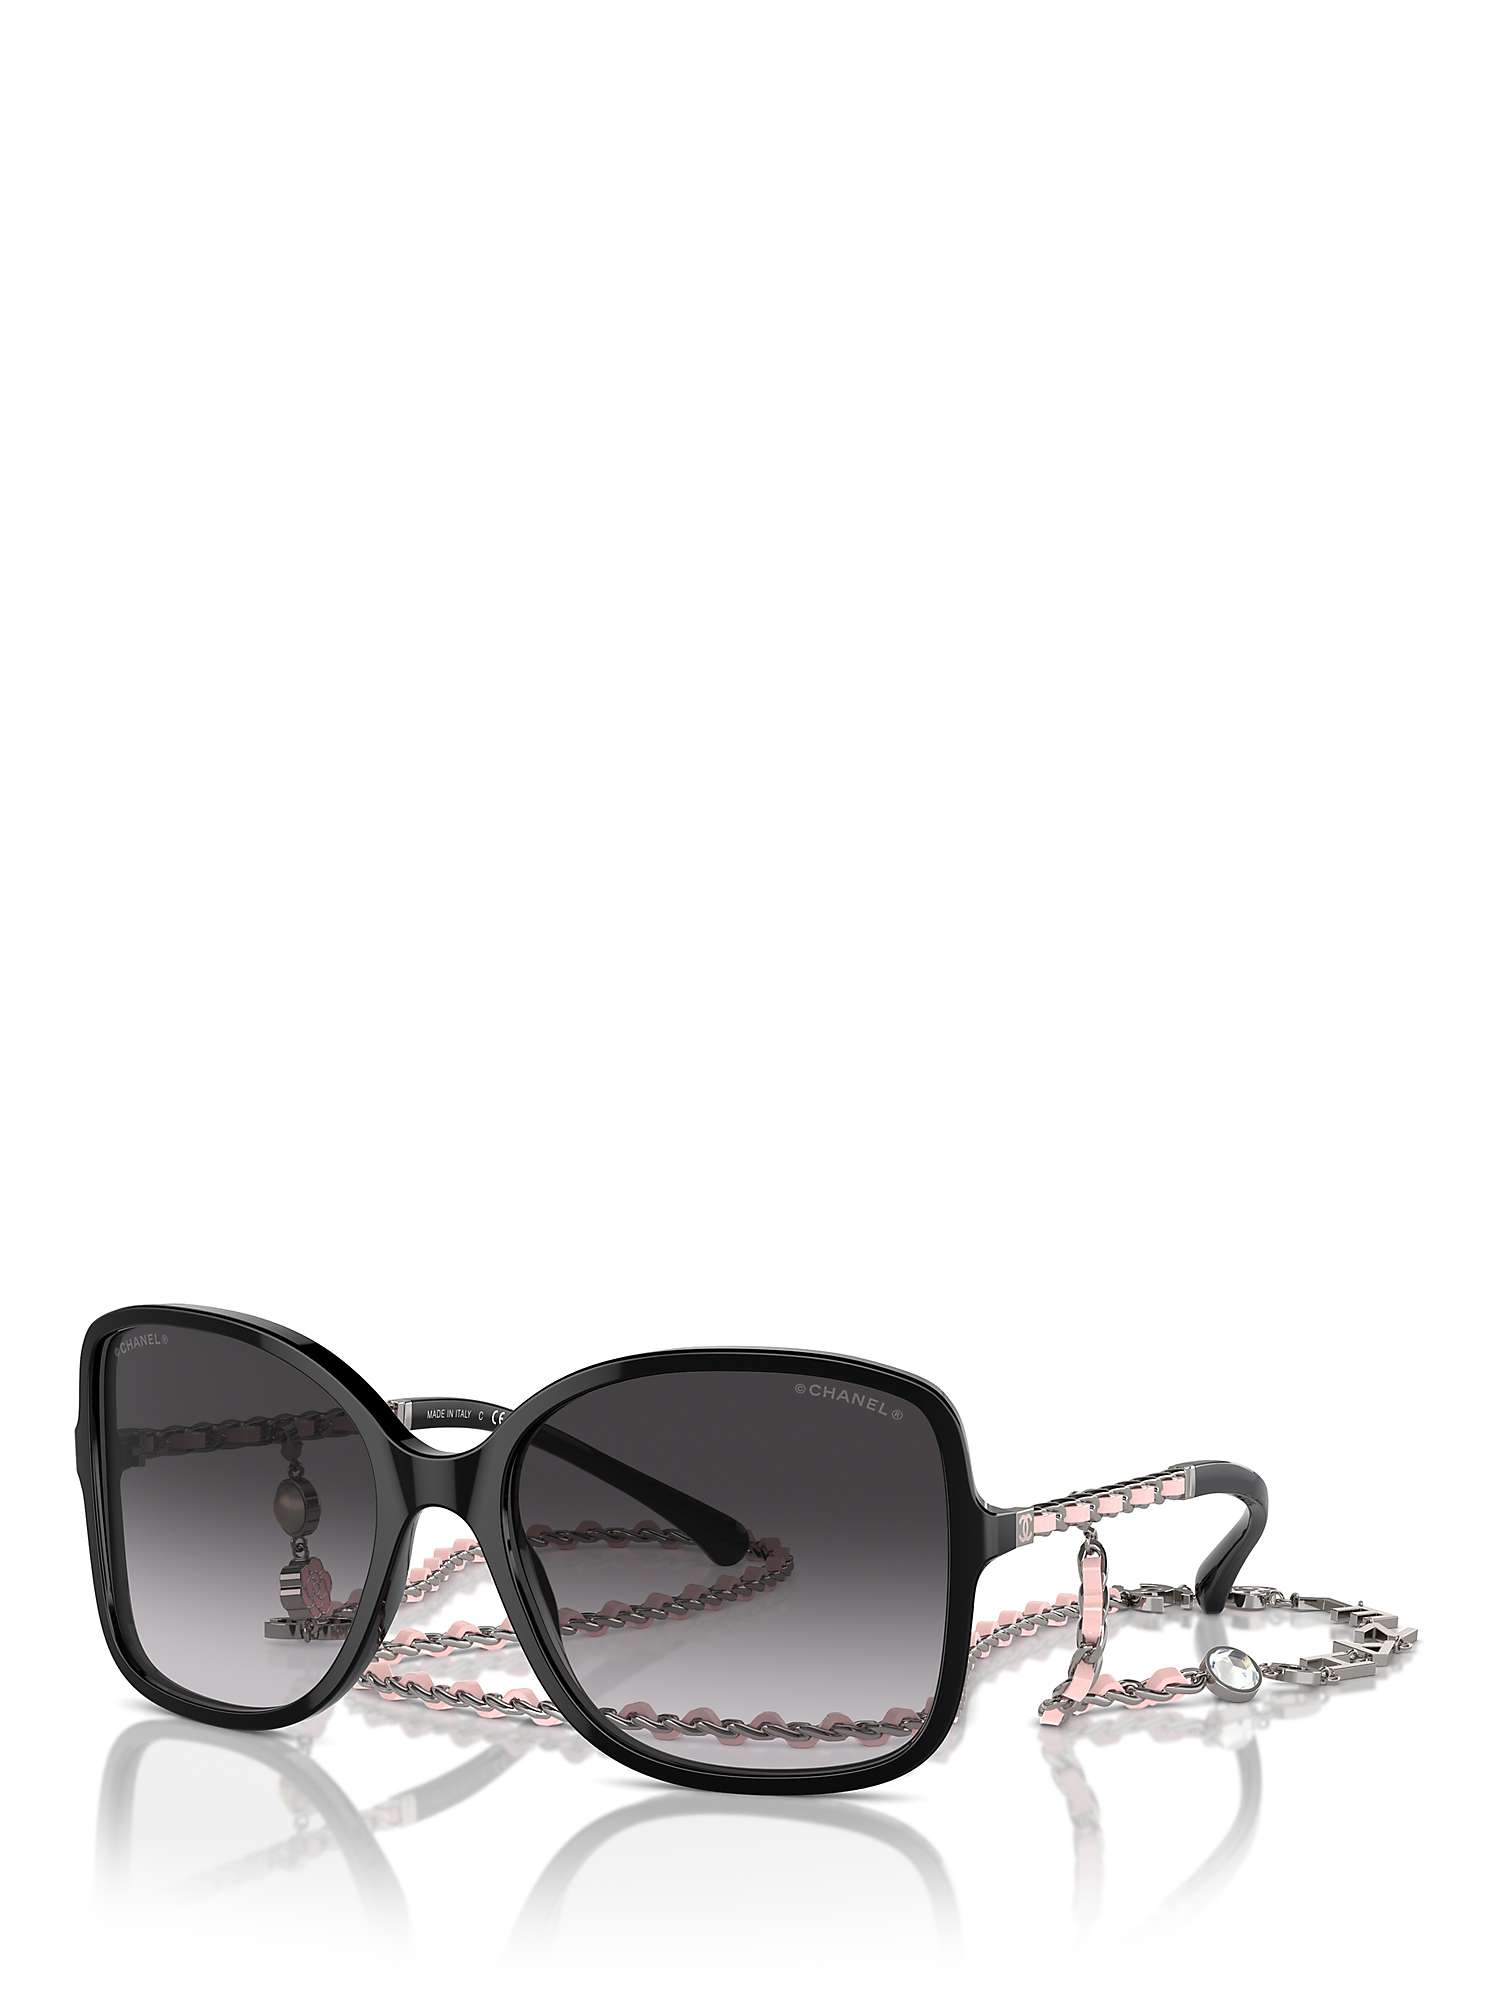 Buy CHANEL Square Sunglasses CH5210Q Black/Grey Gradient Online at johnlewis.com